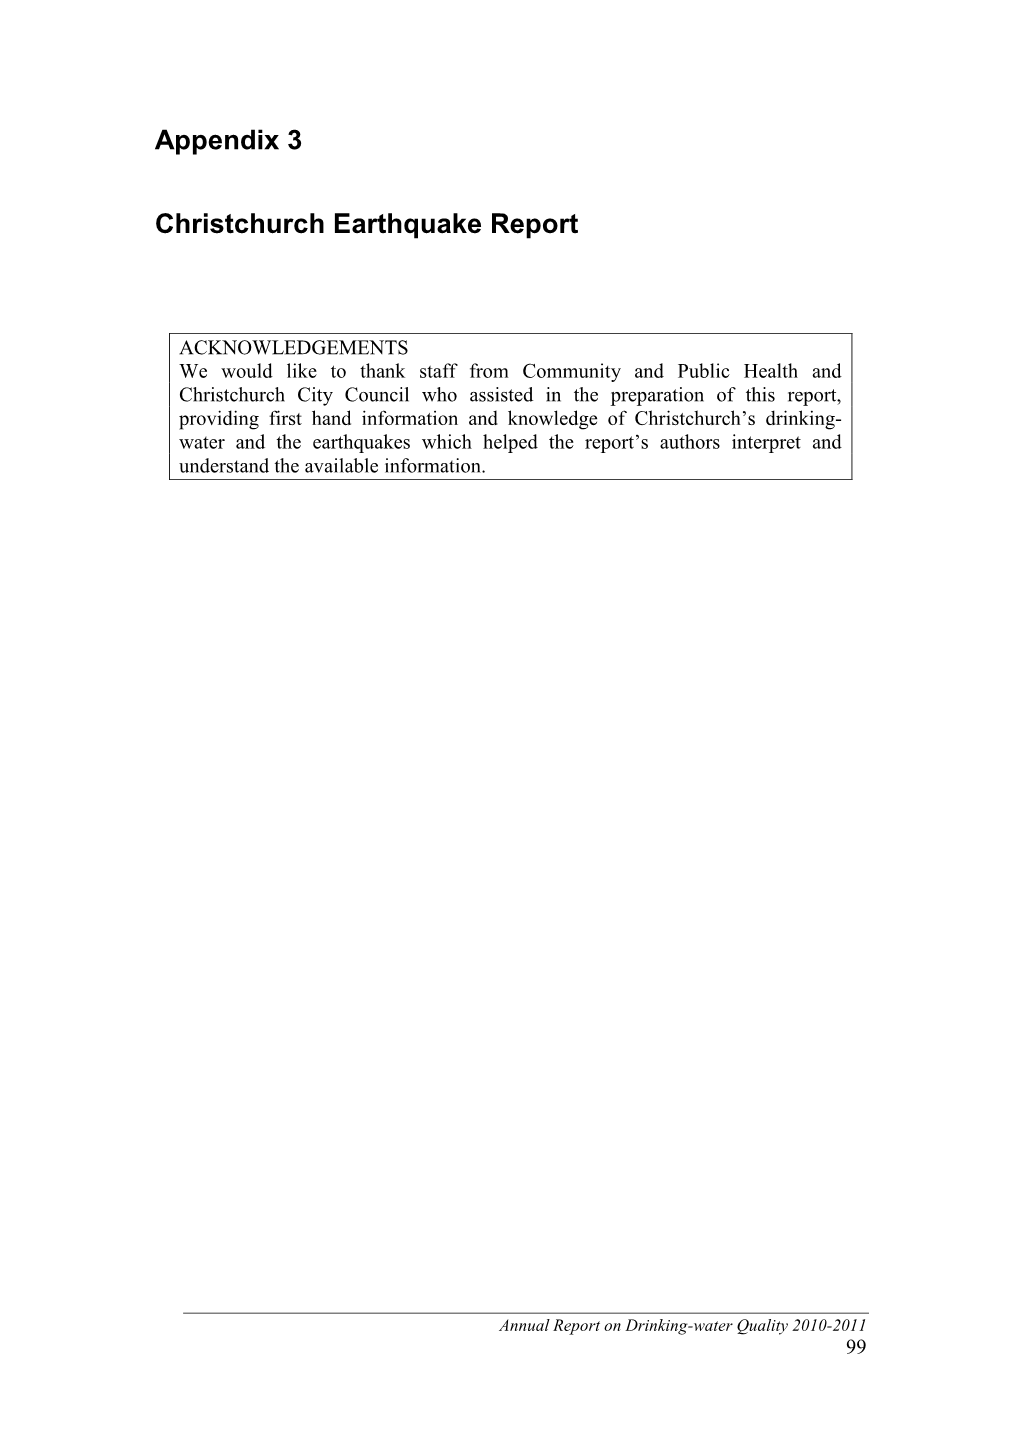 Appendix 3 Christchurch Earthquake Report